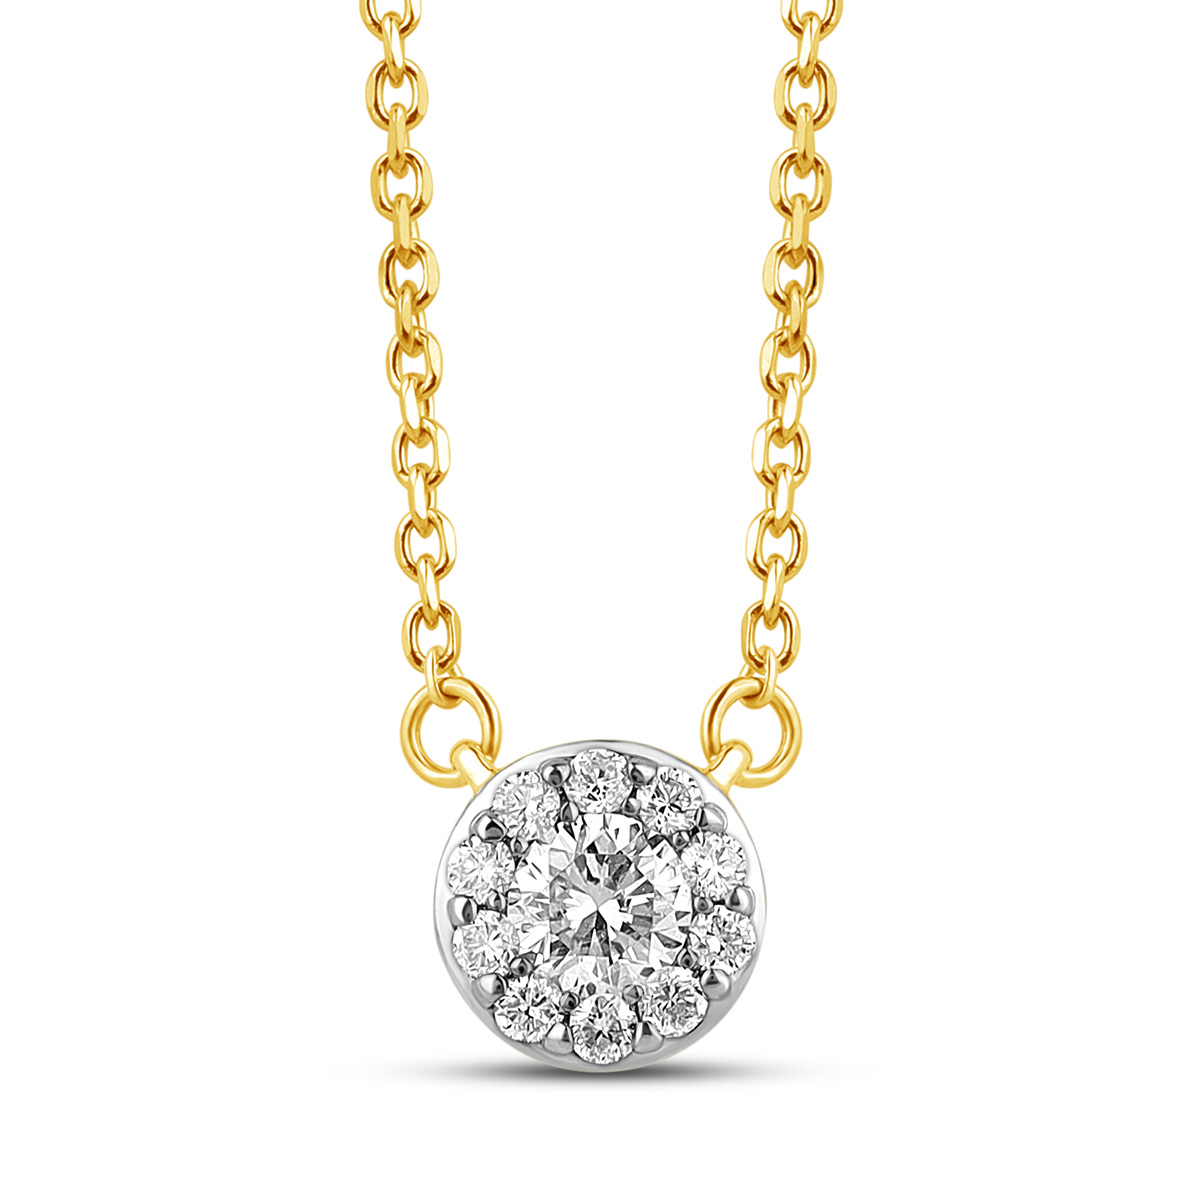 HE52451UWD4YN
14k yellow gold diamond necklace